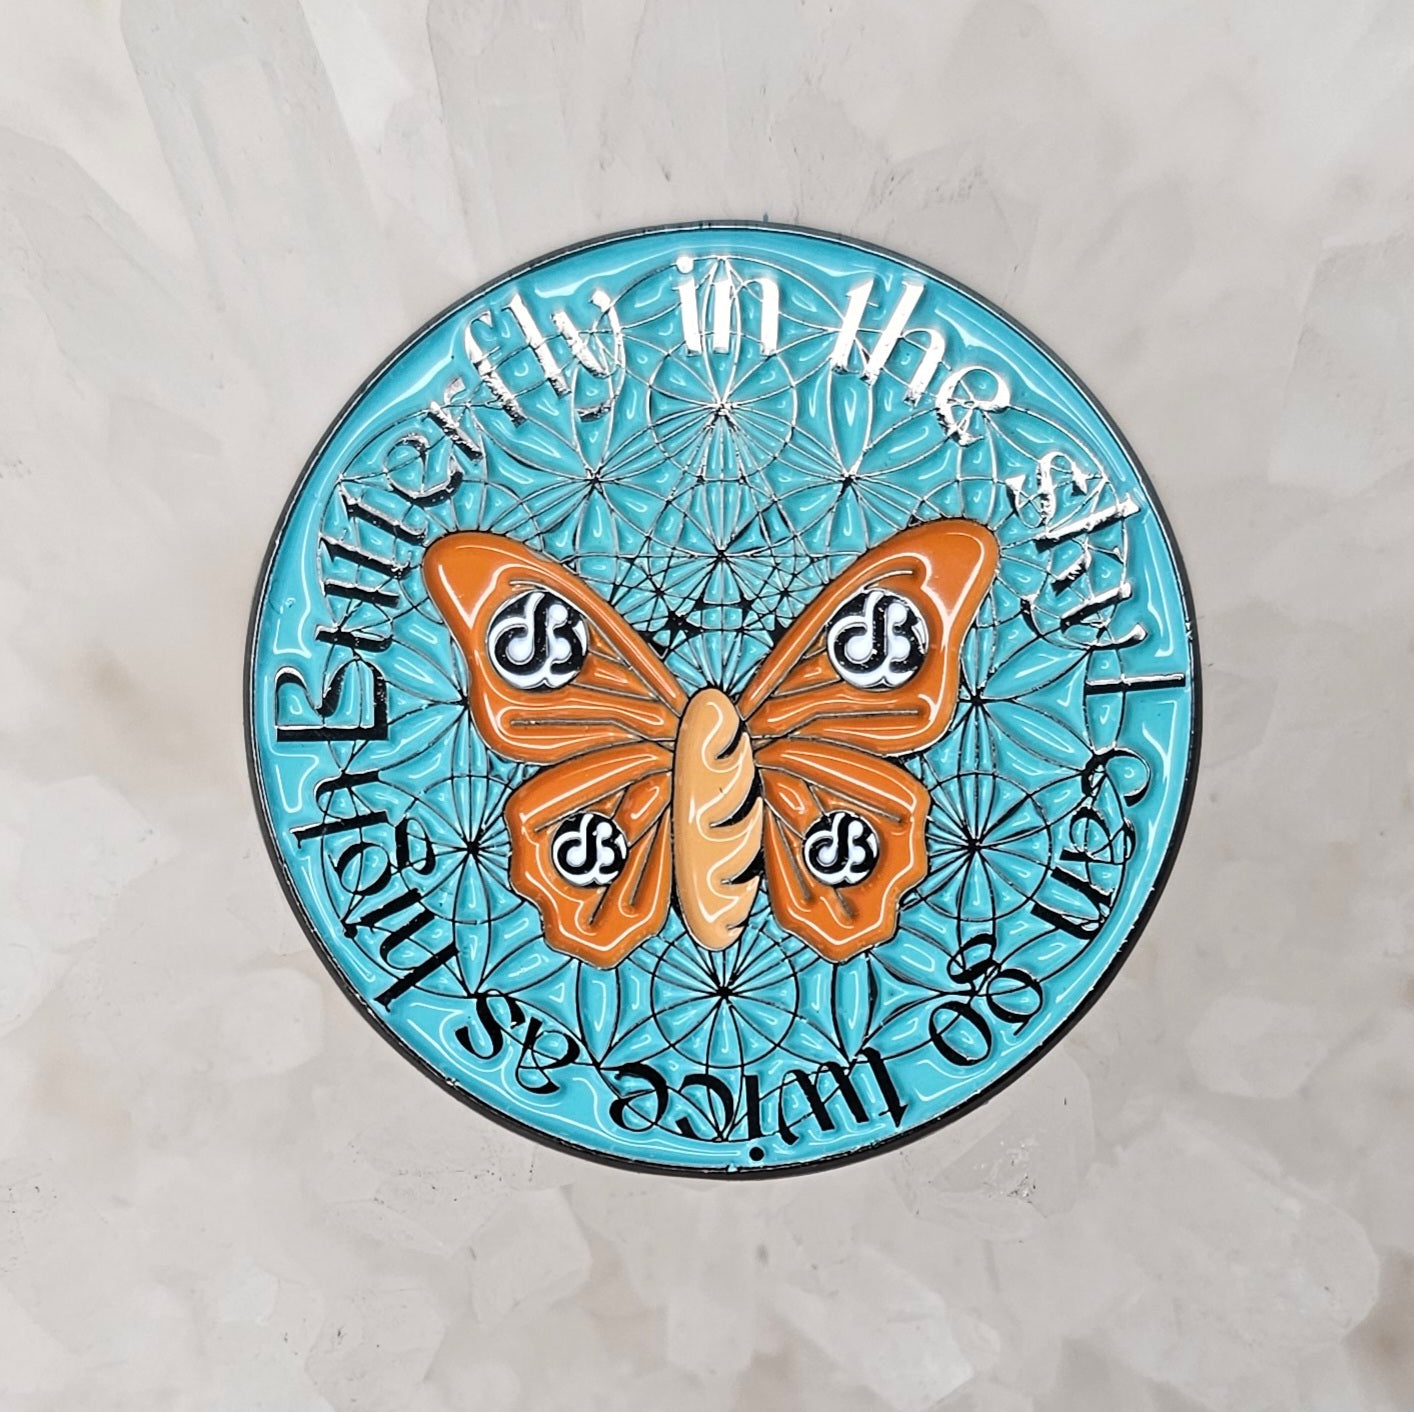 Daily Bread Breadfly Butterfly Moth Edm Dj Dubstep Enamel Pins Hat Pins Lapel Pin Brooch Badge Festival Pin